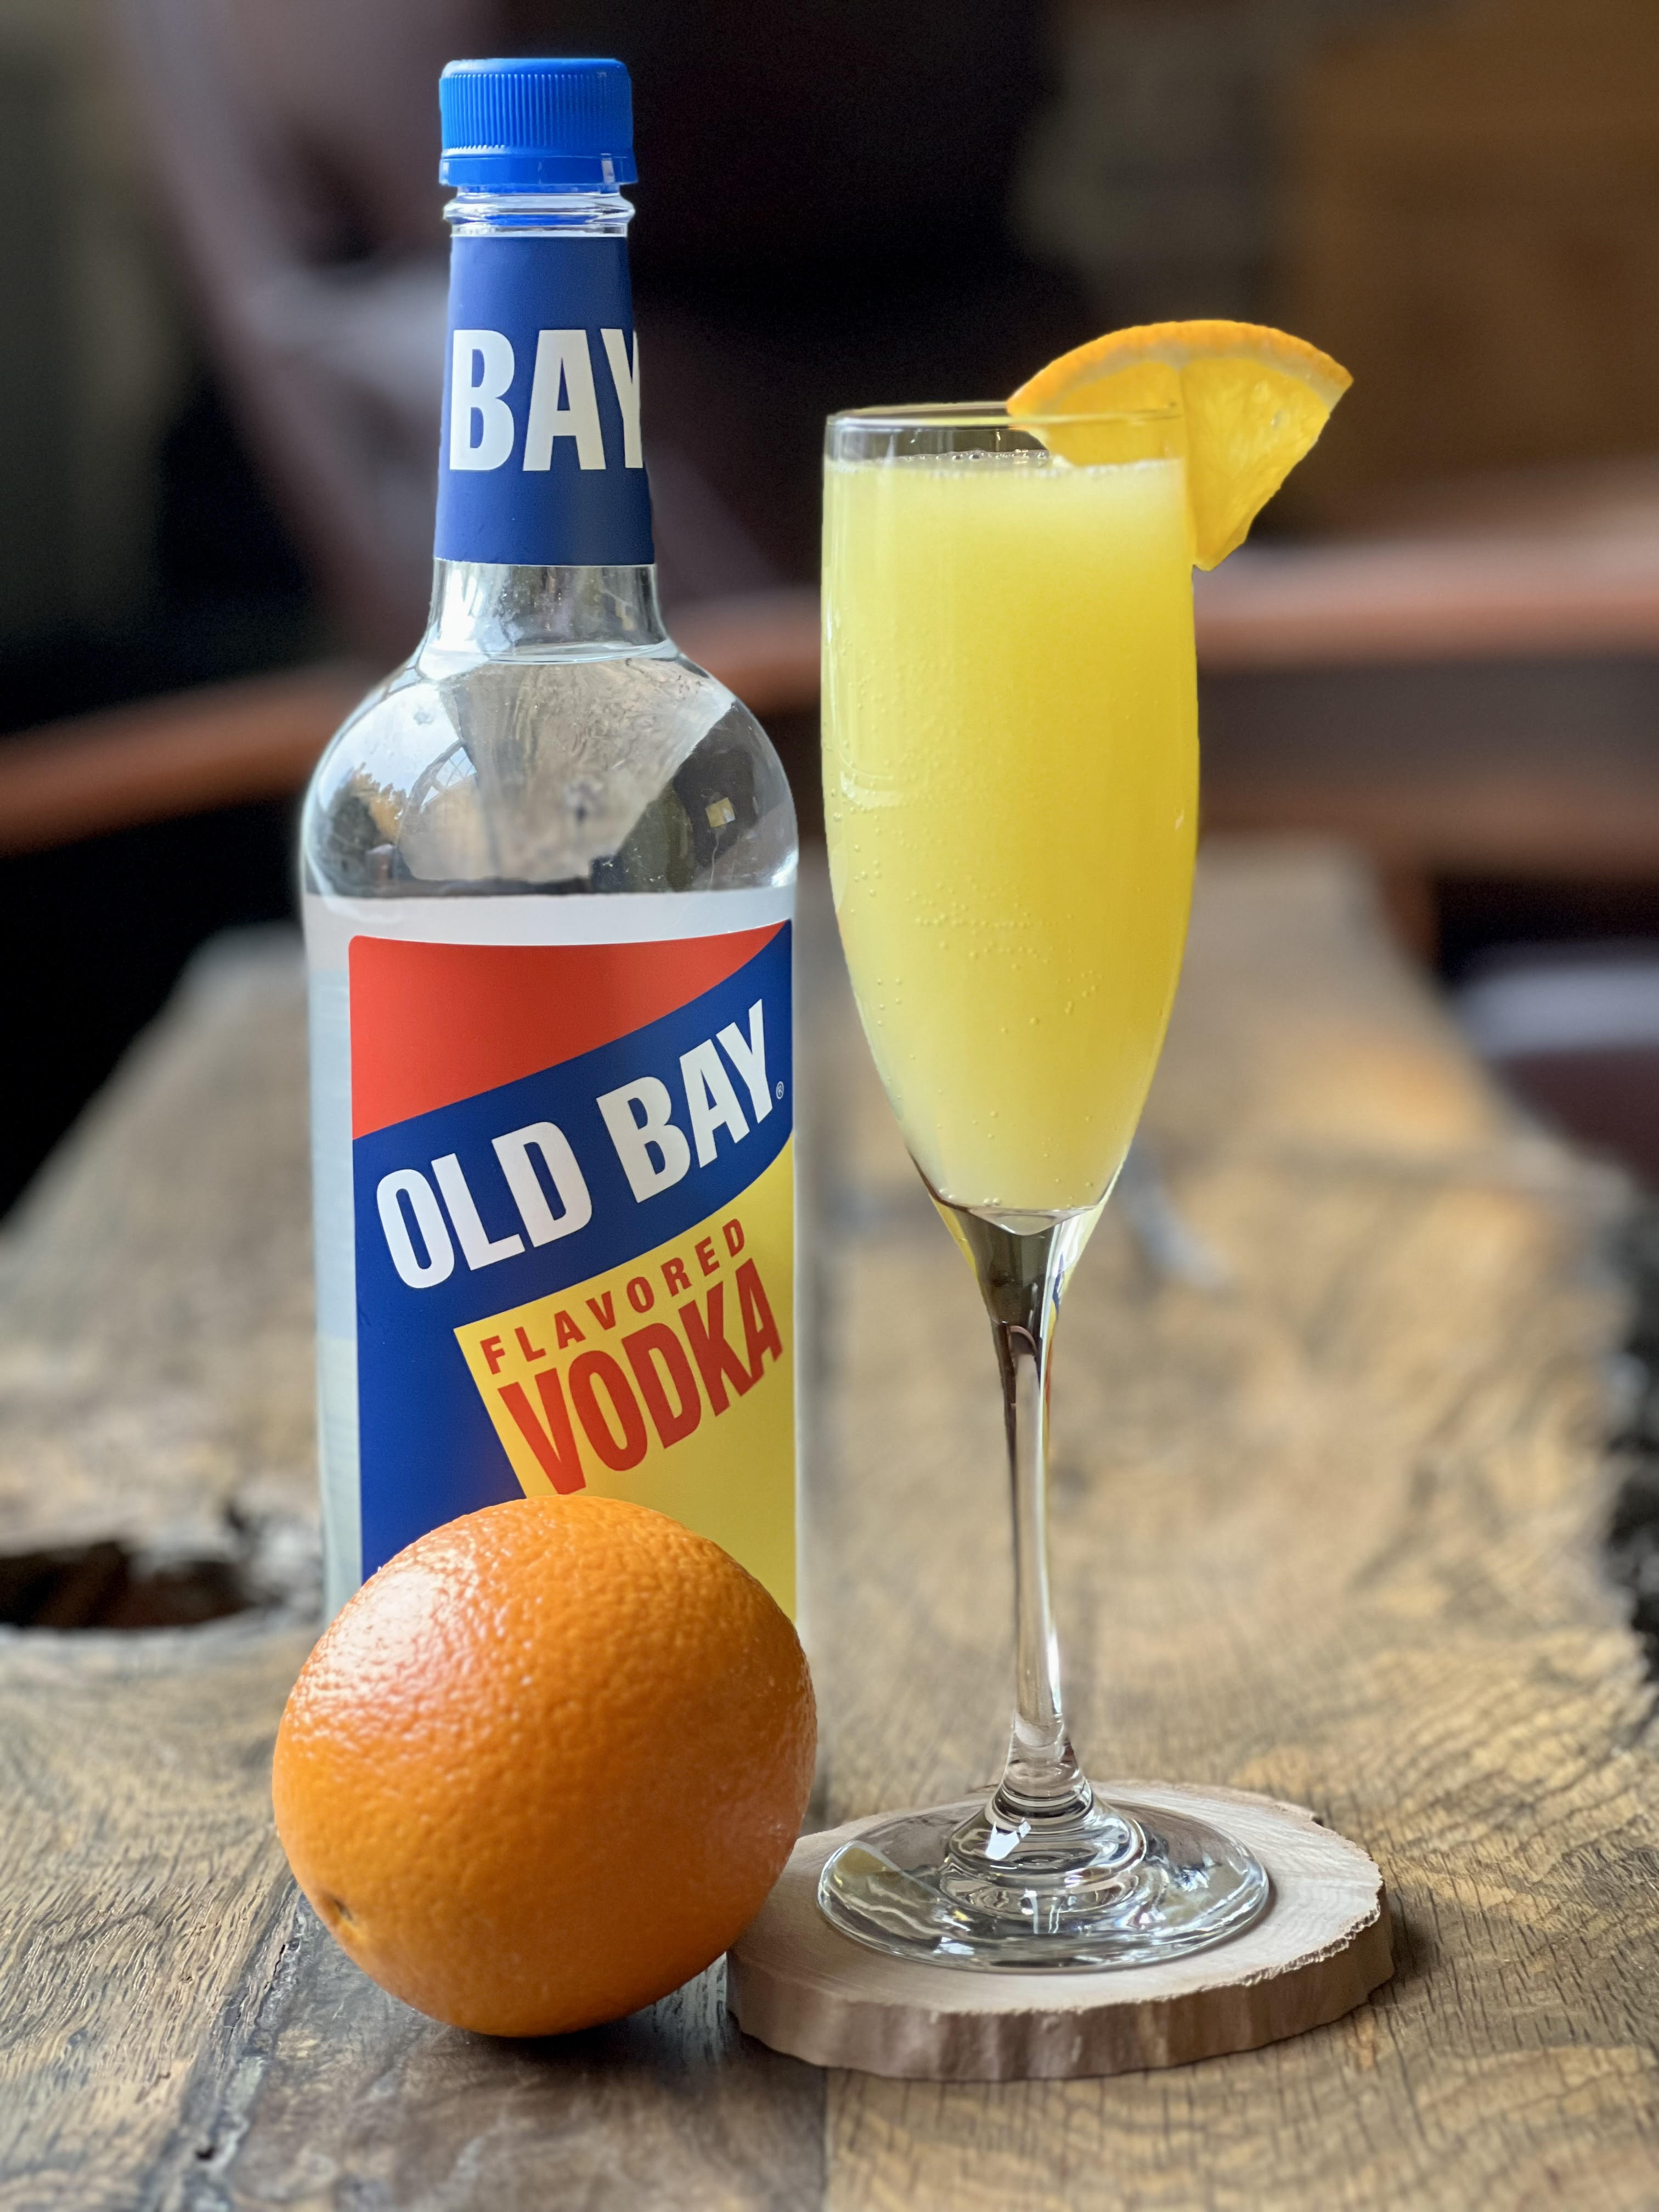 bellini cocktail with old bay vodka bottle and orange